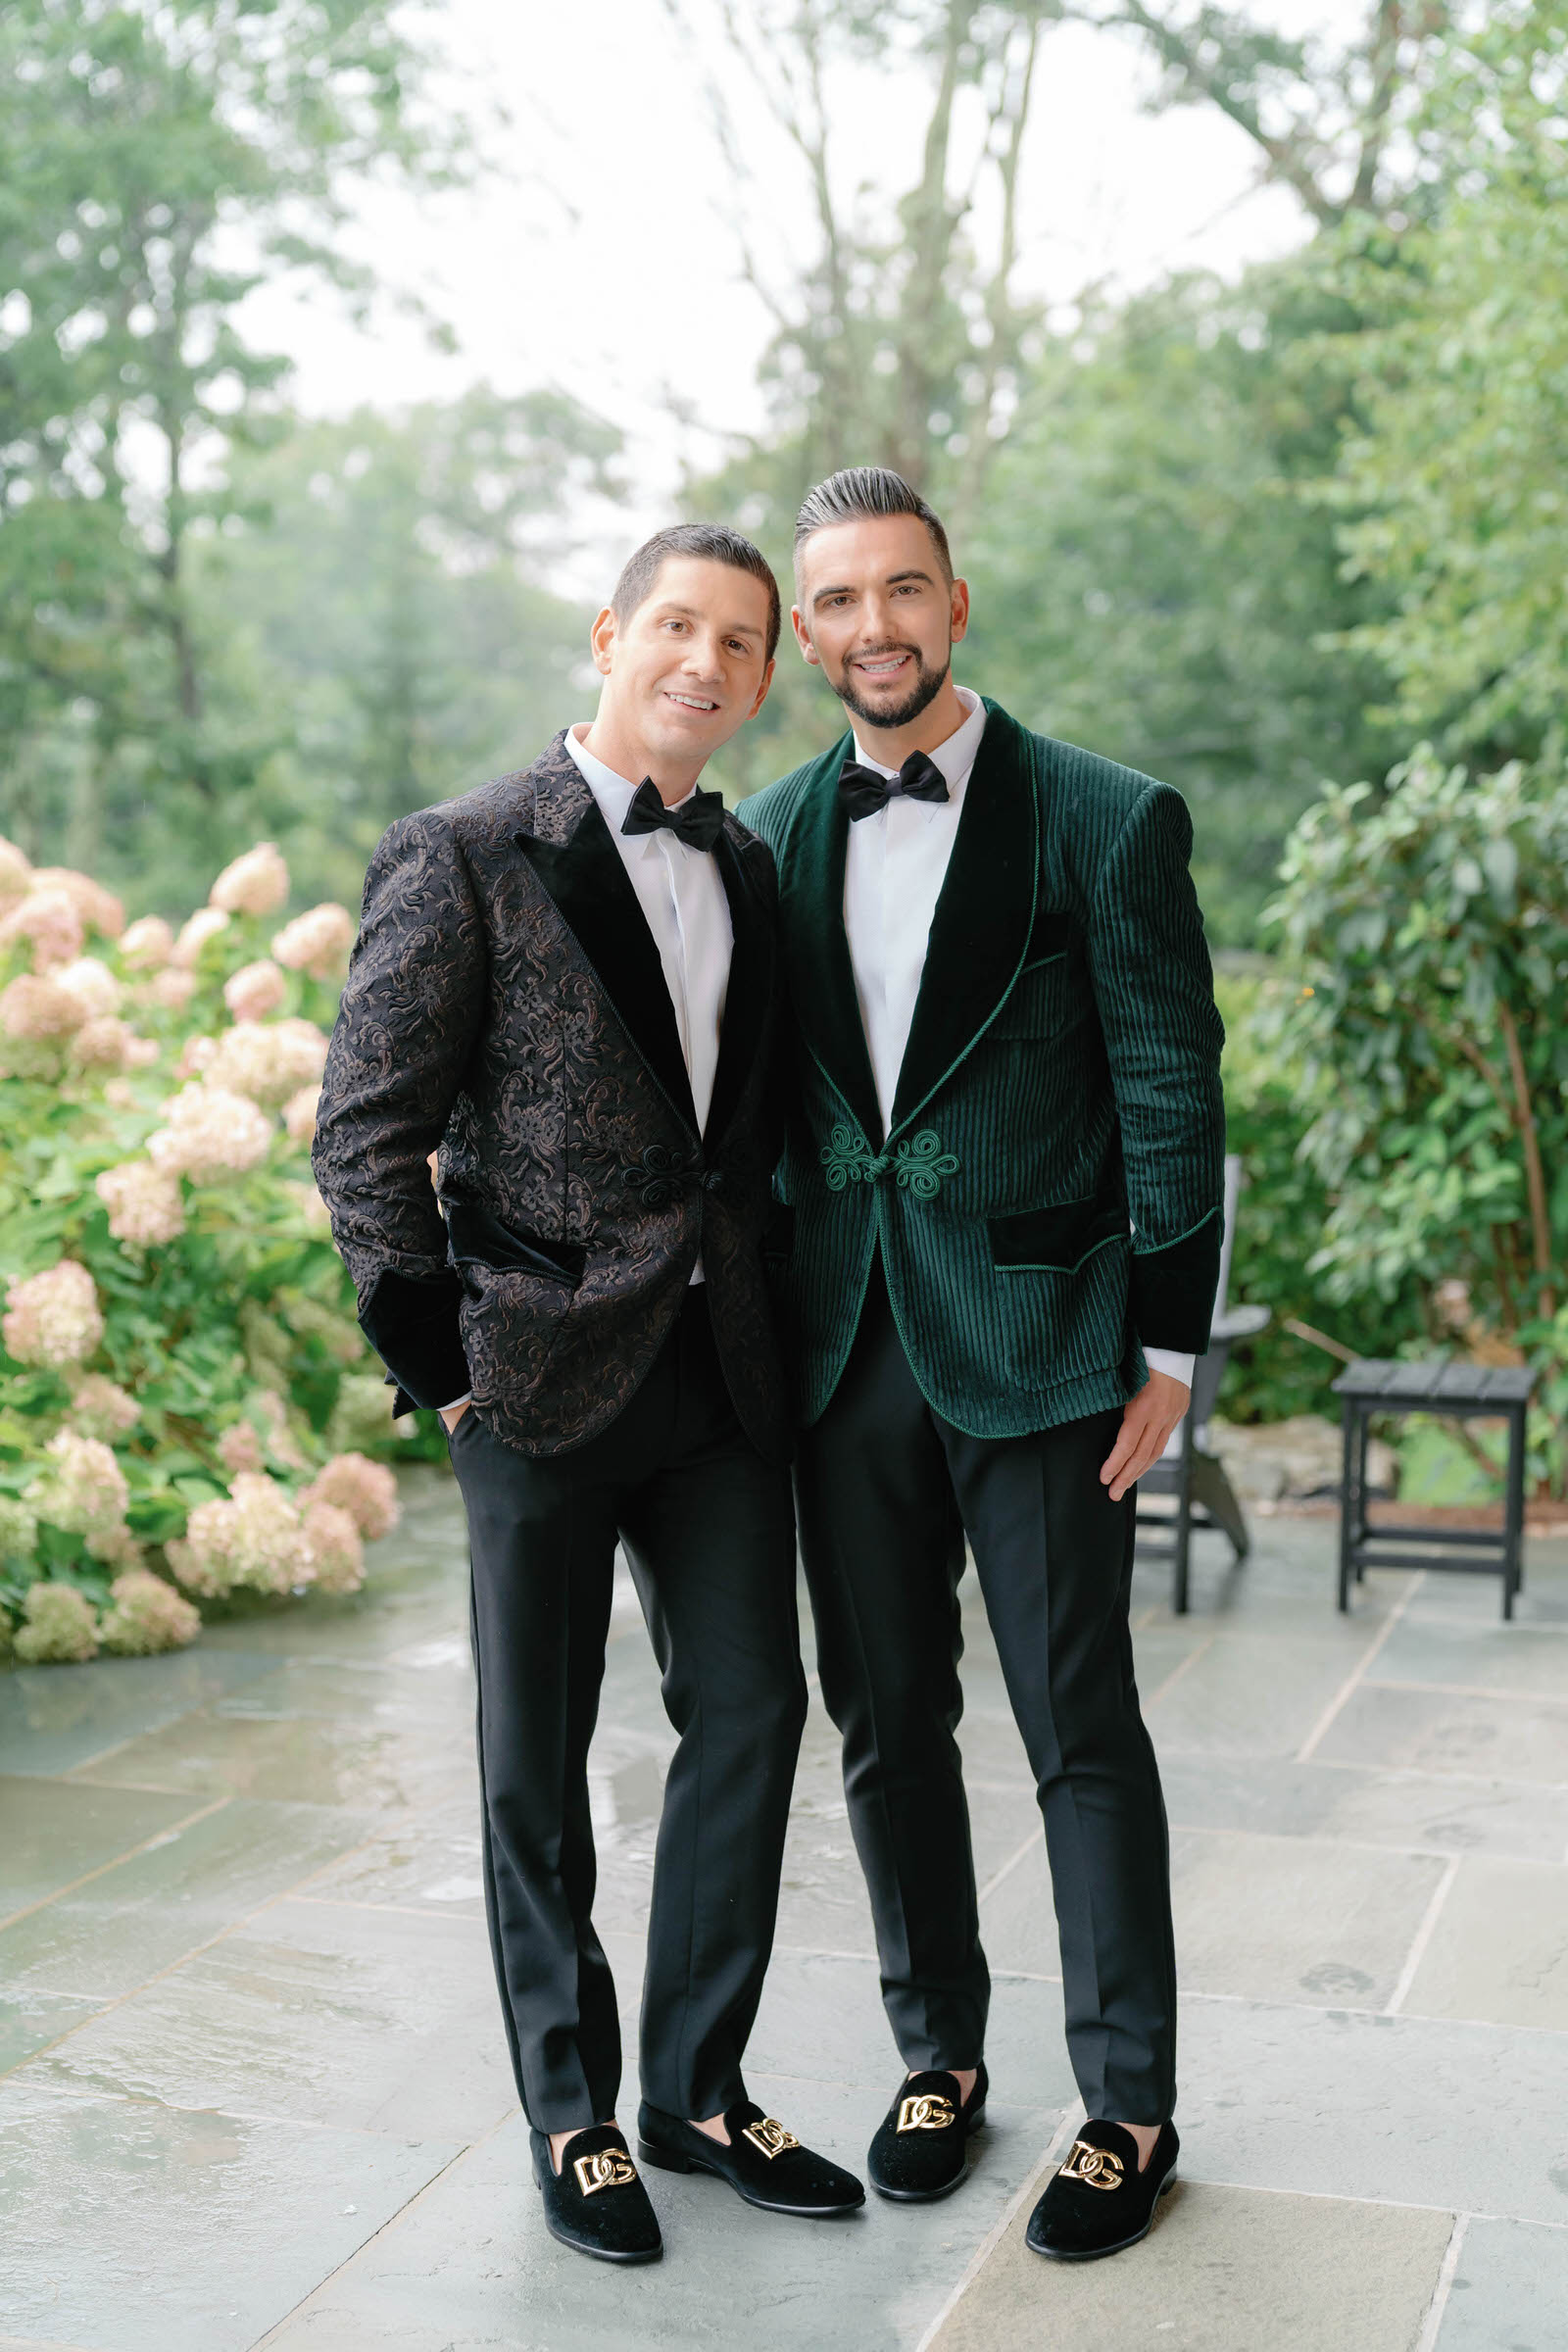 Nicholas Marco and Michael Masco's wedding.